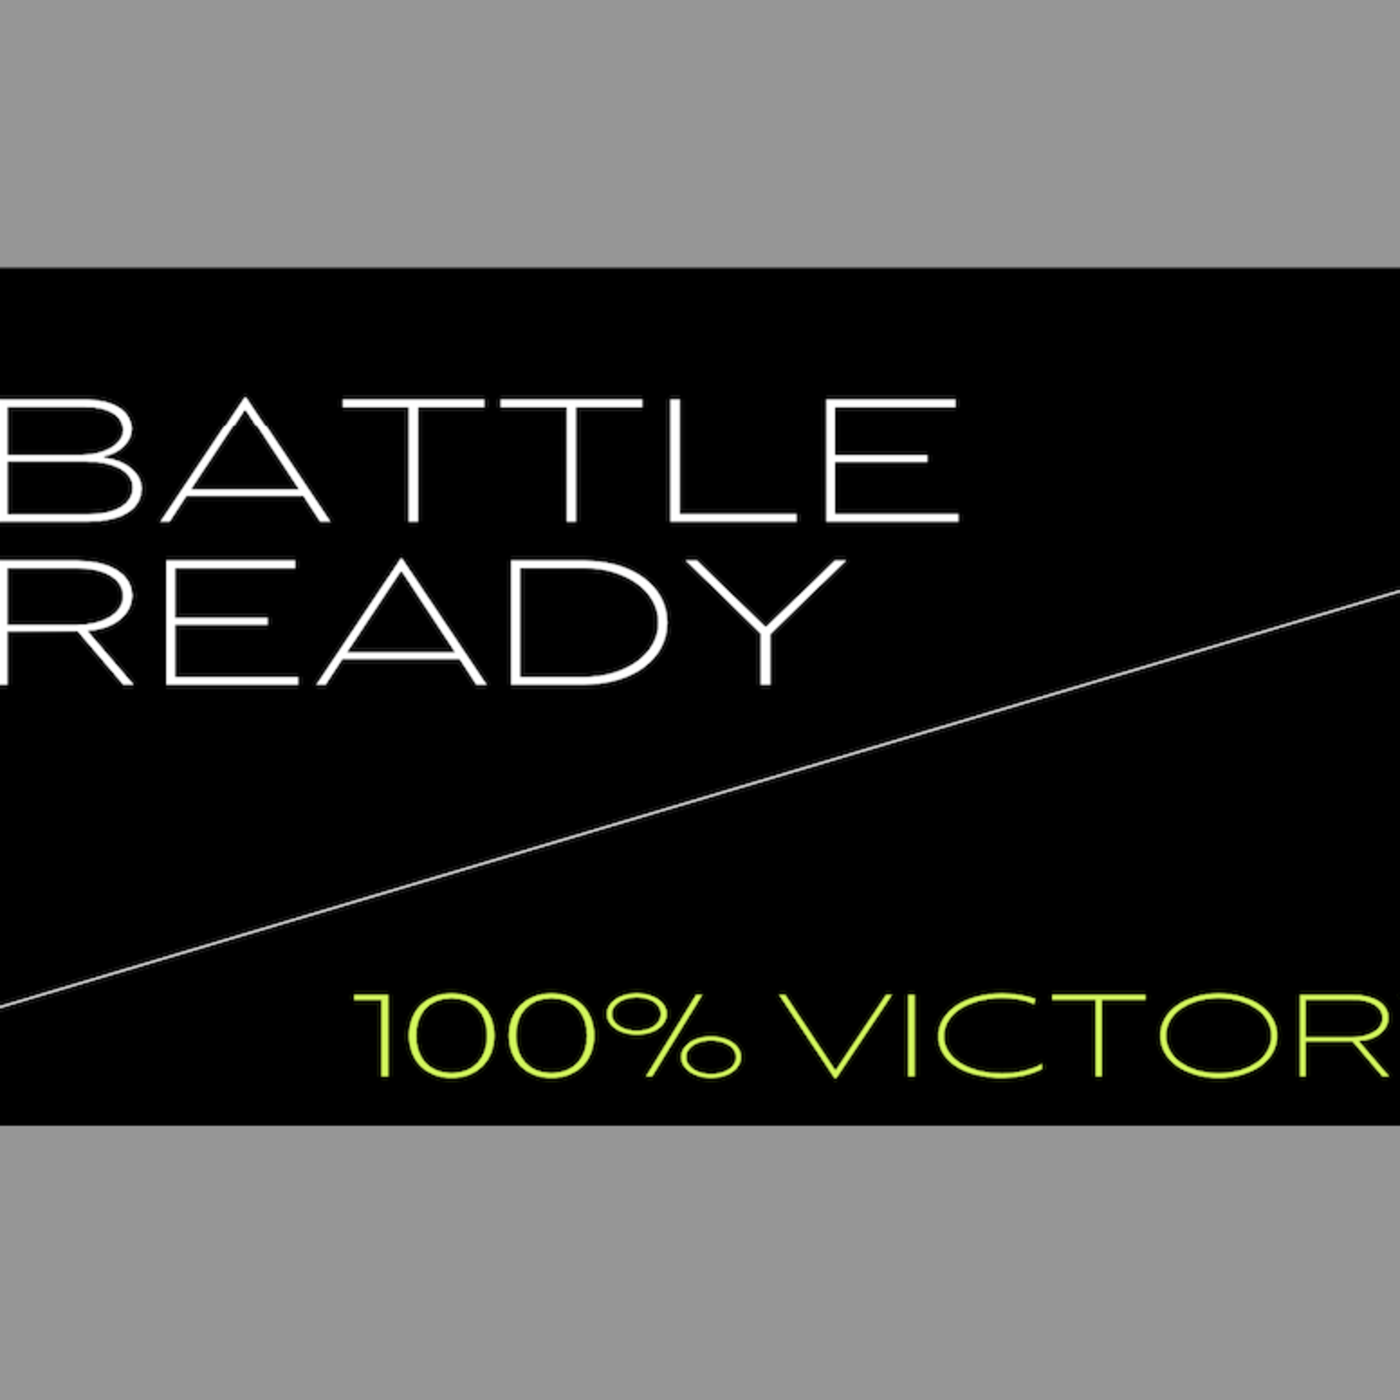 Episode 170: Battle Ready - 100% Victory